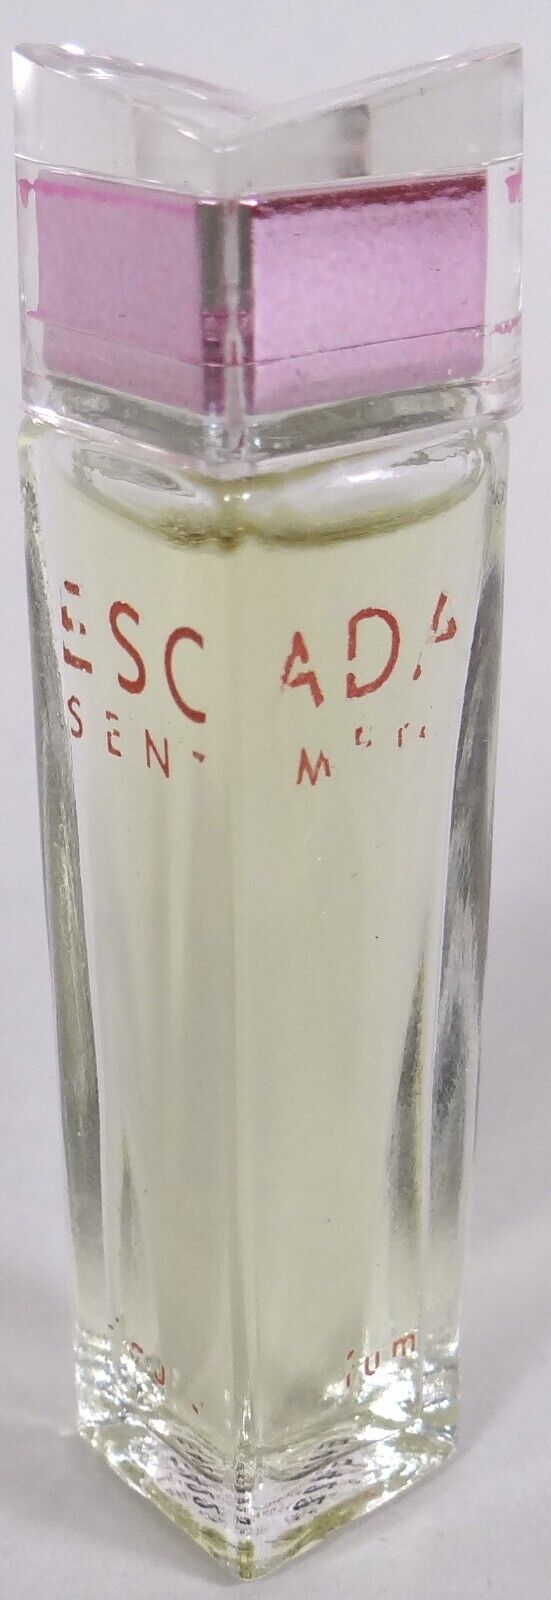 Escada Sentiment Perfume Mini Travel Size .14 oz Fruity Floral Powdery Scent